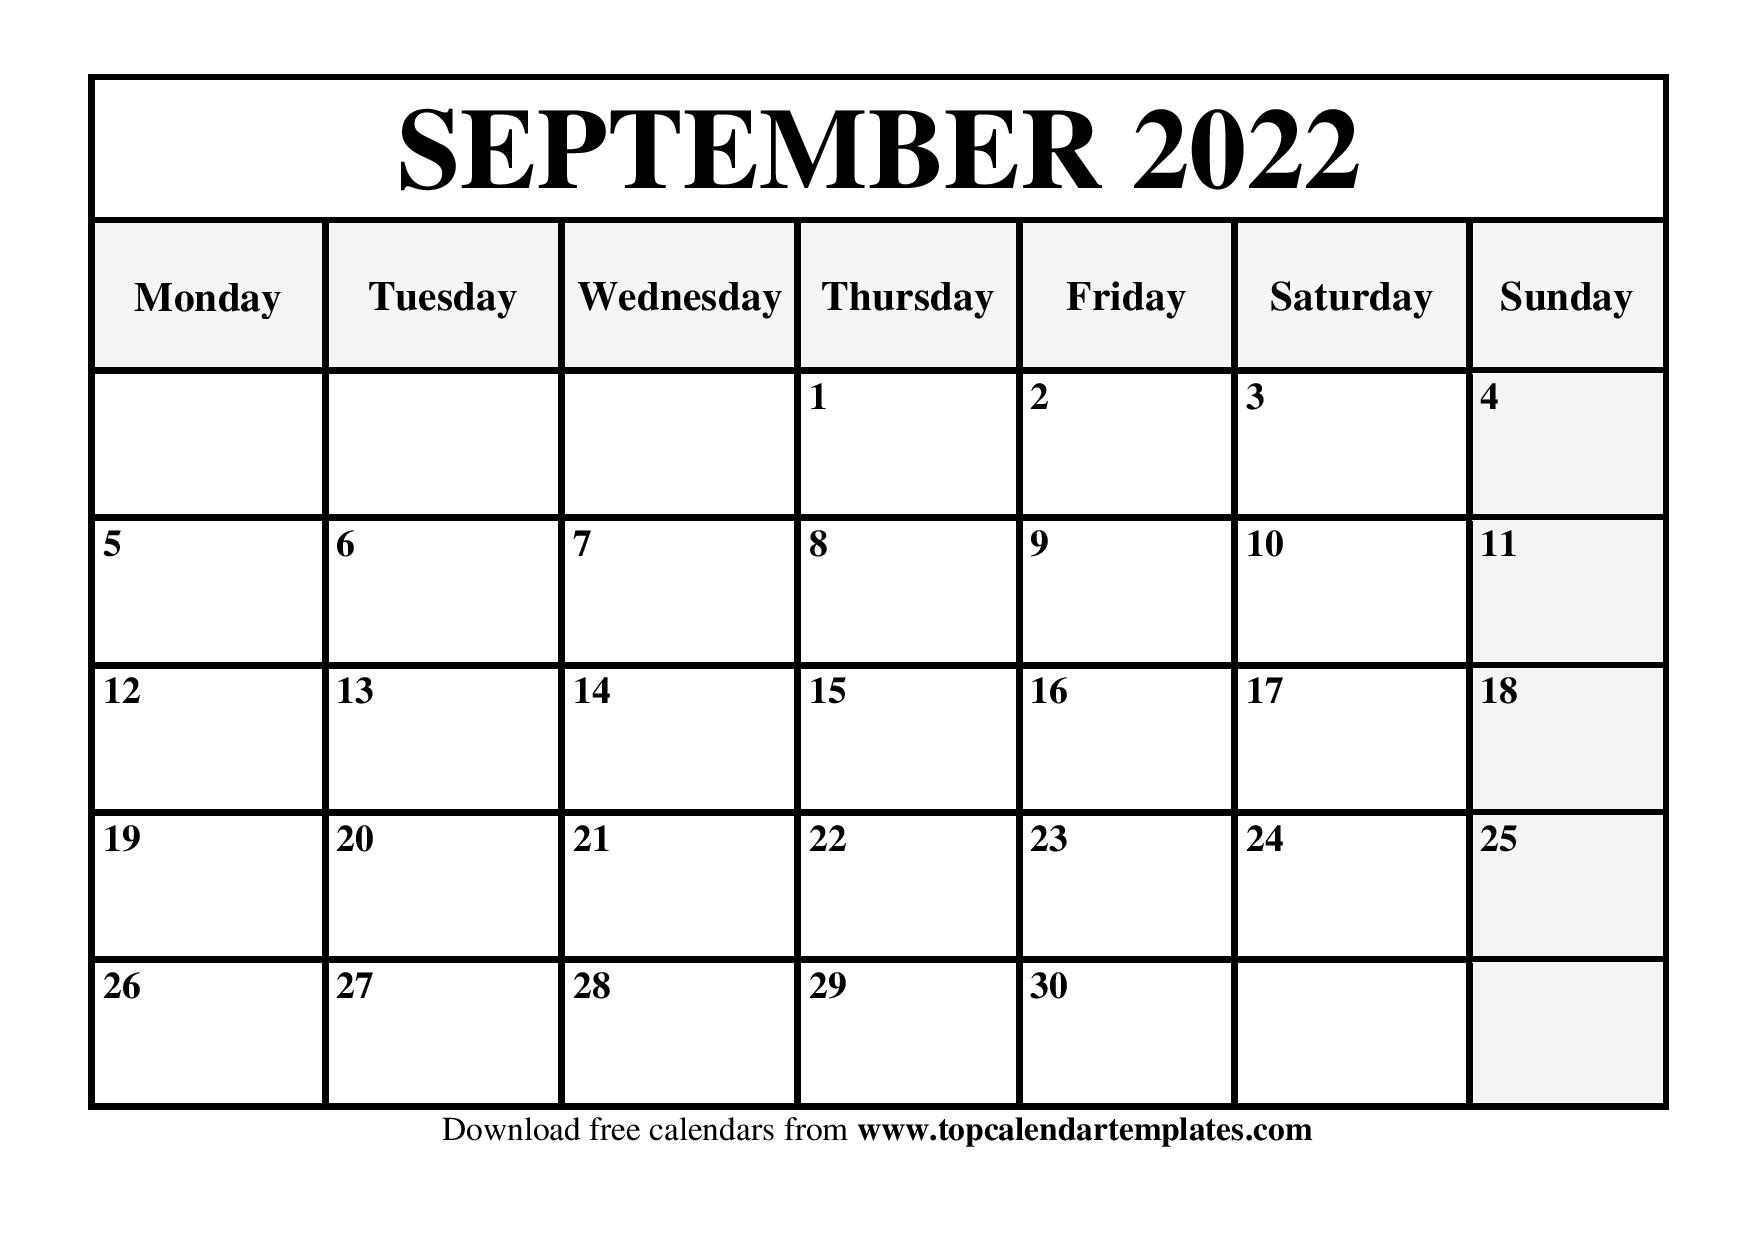 September 2022 Printable Calendar Printable Calendar September 2022 Templates - Pdf, Word, Excel